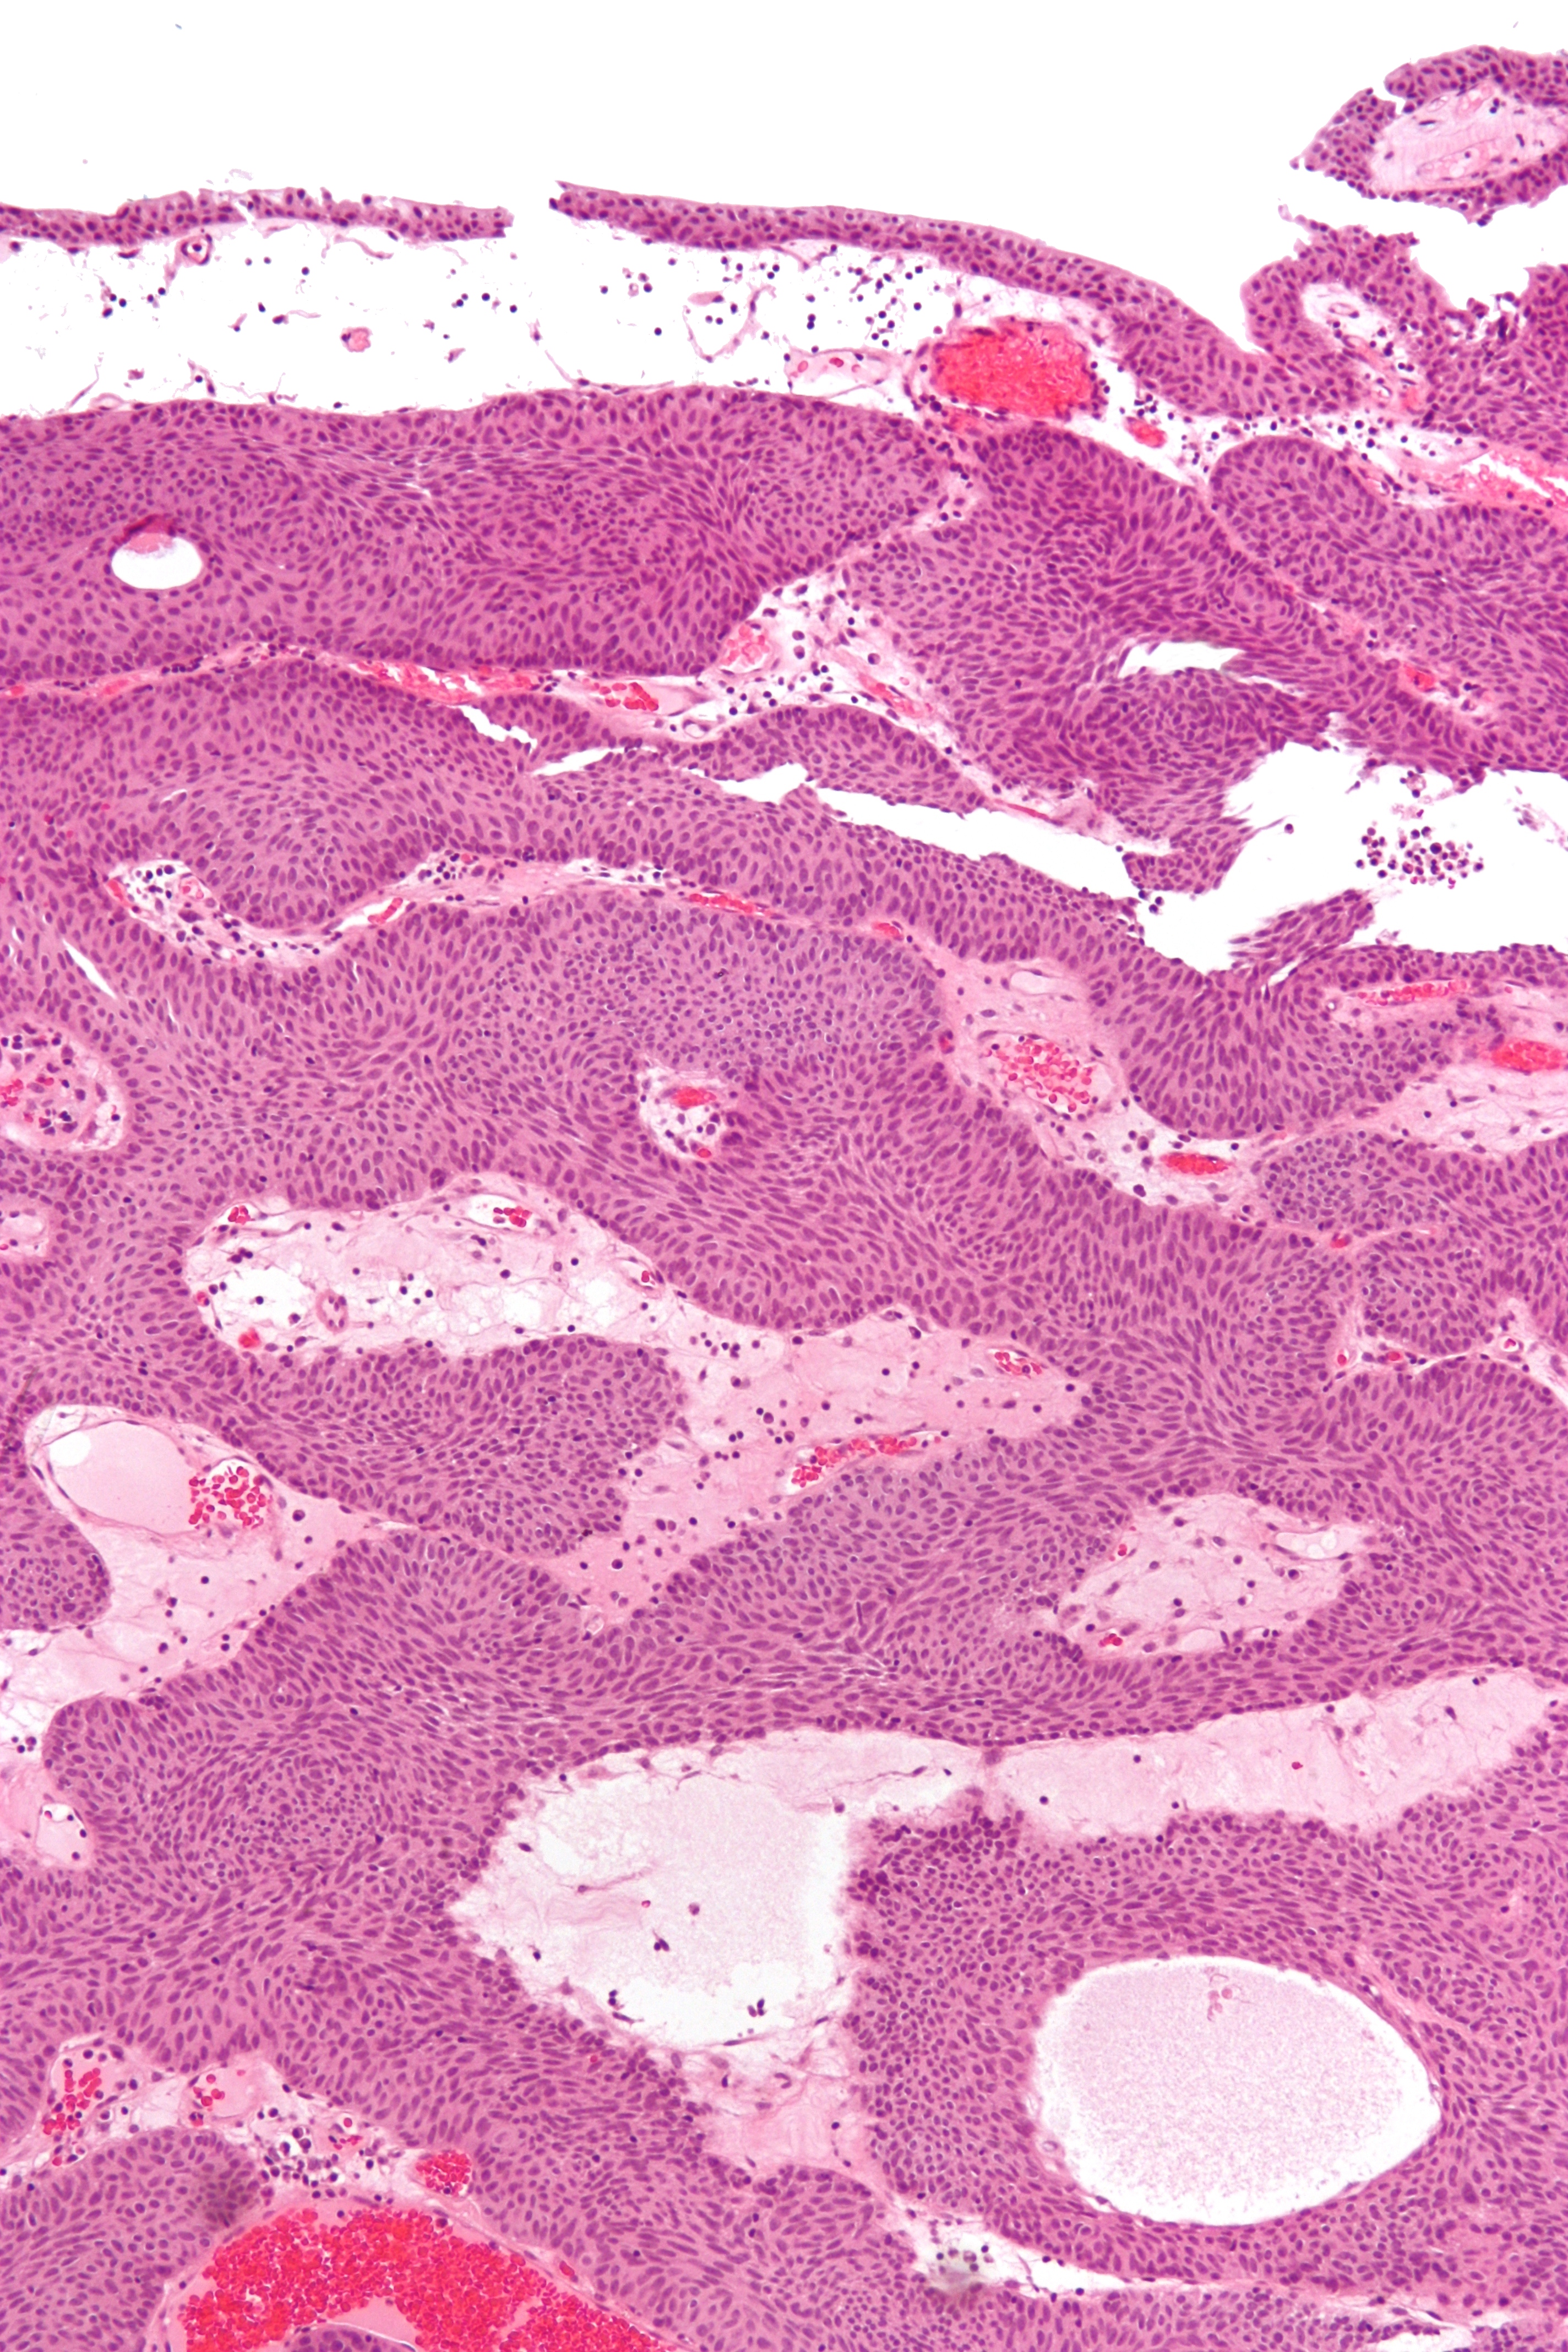 Sinonasal papilloma pathology outlines Romanian Journal of Urology - PDF Free Download